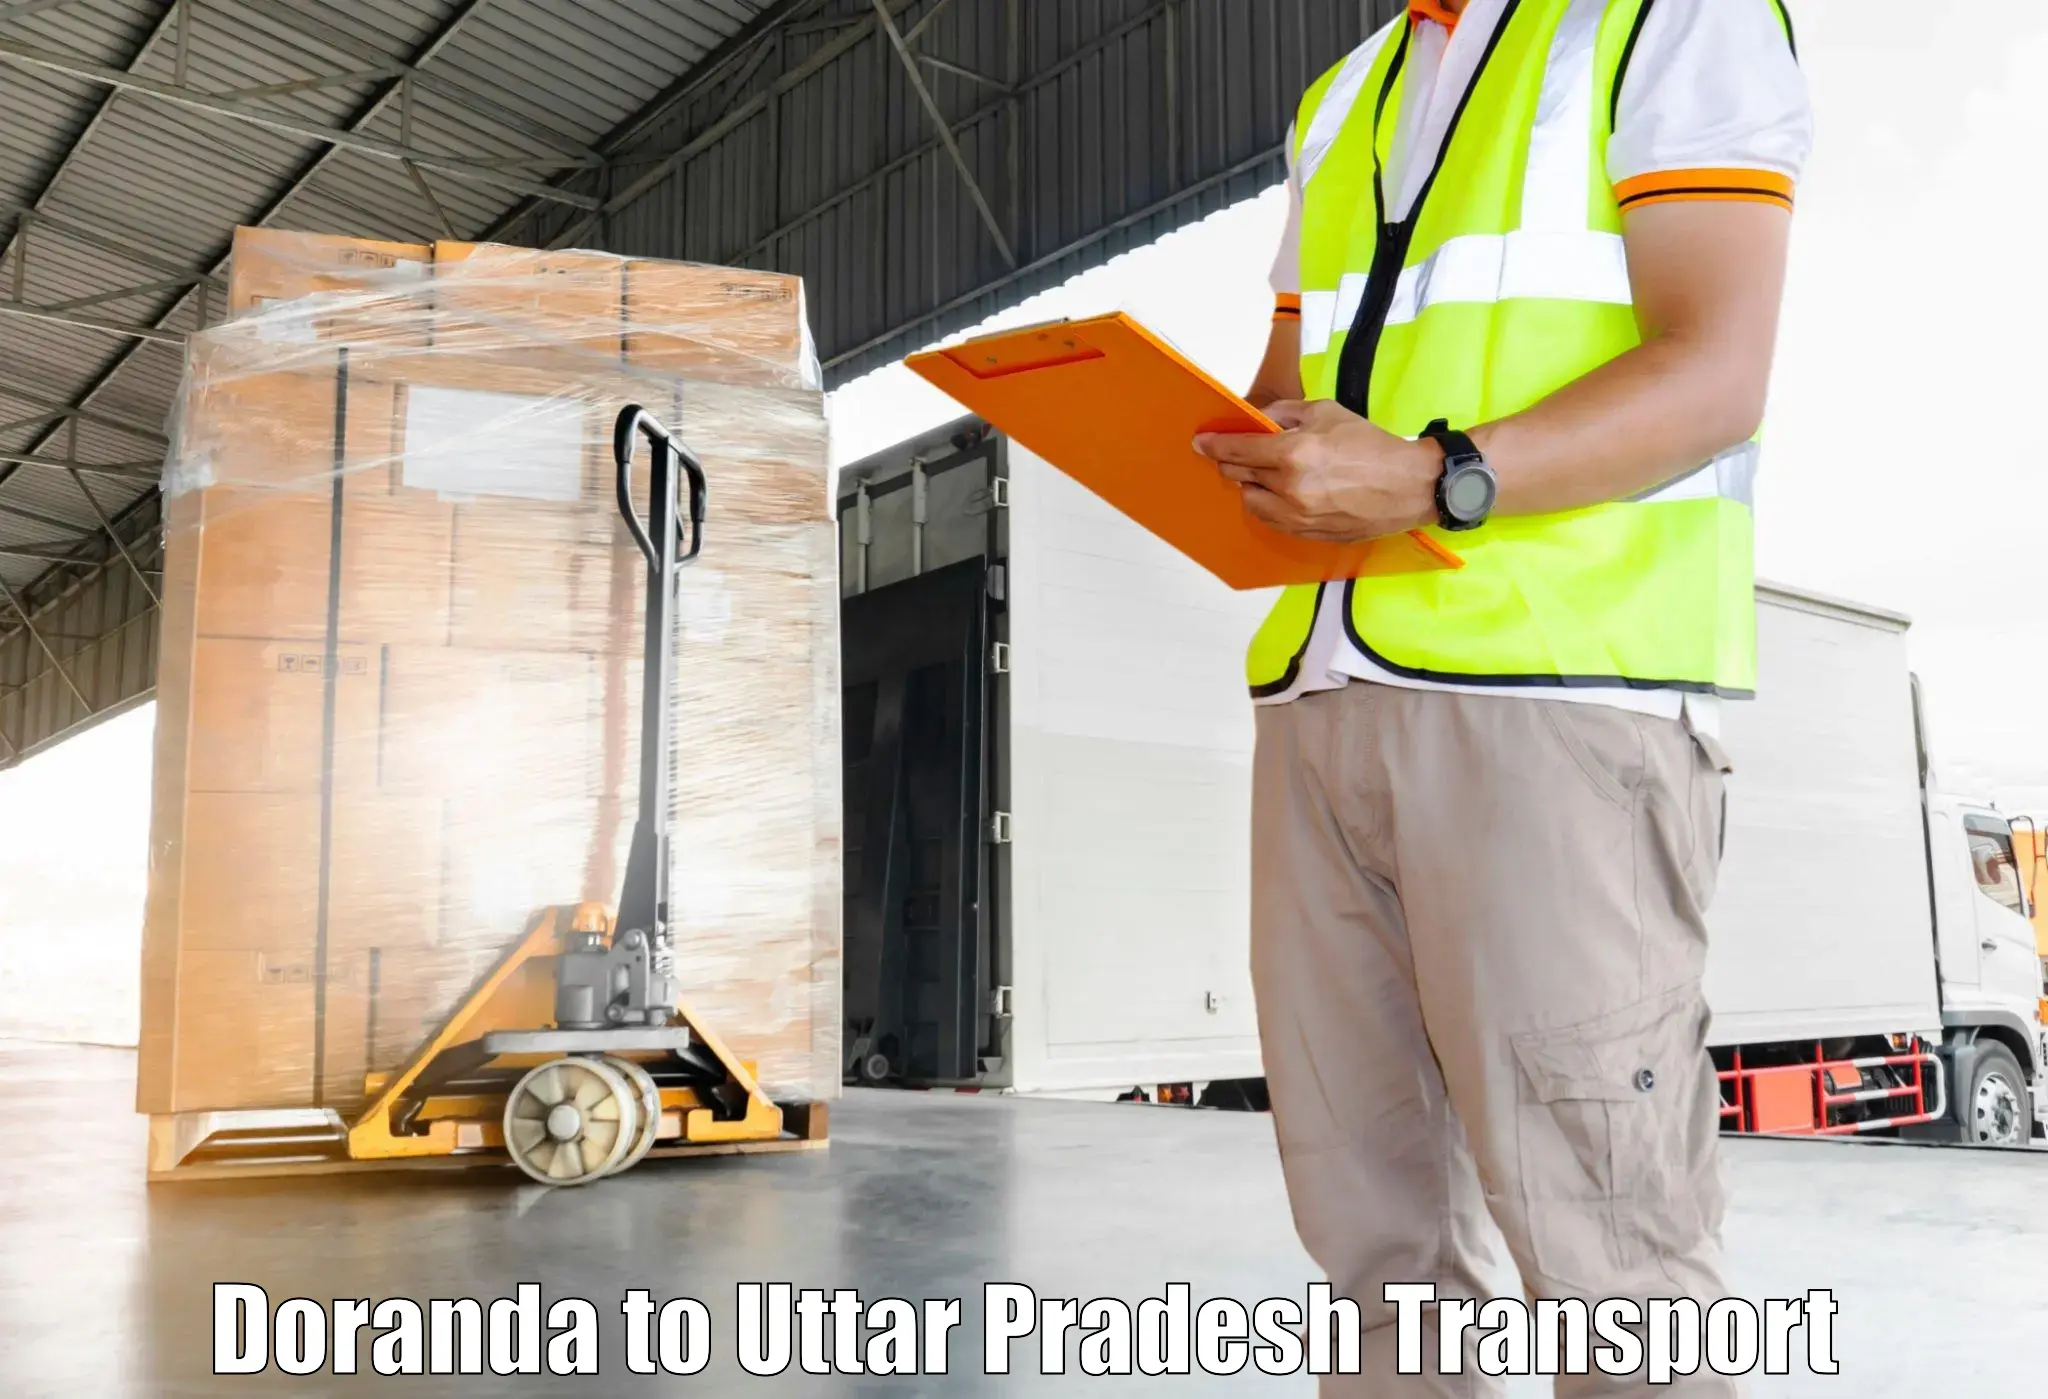 Truck transport companies in India Doranda to Agra